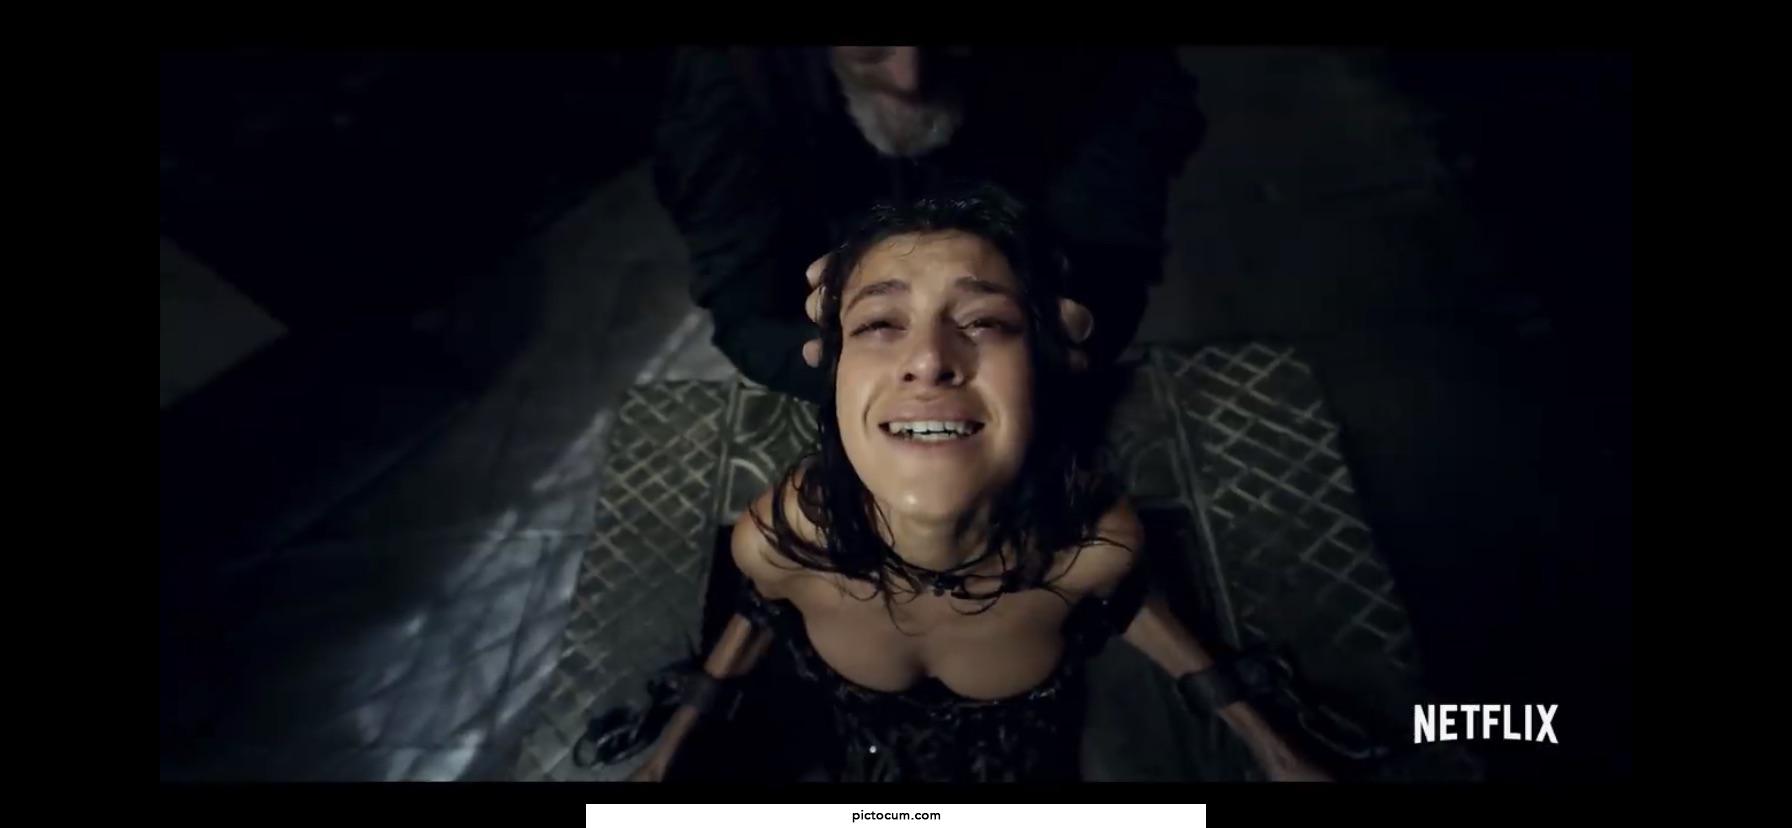 Anya Chalotra, the witcher season 2 trailer scene. Huge milkers😎